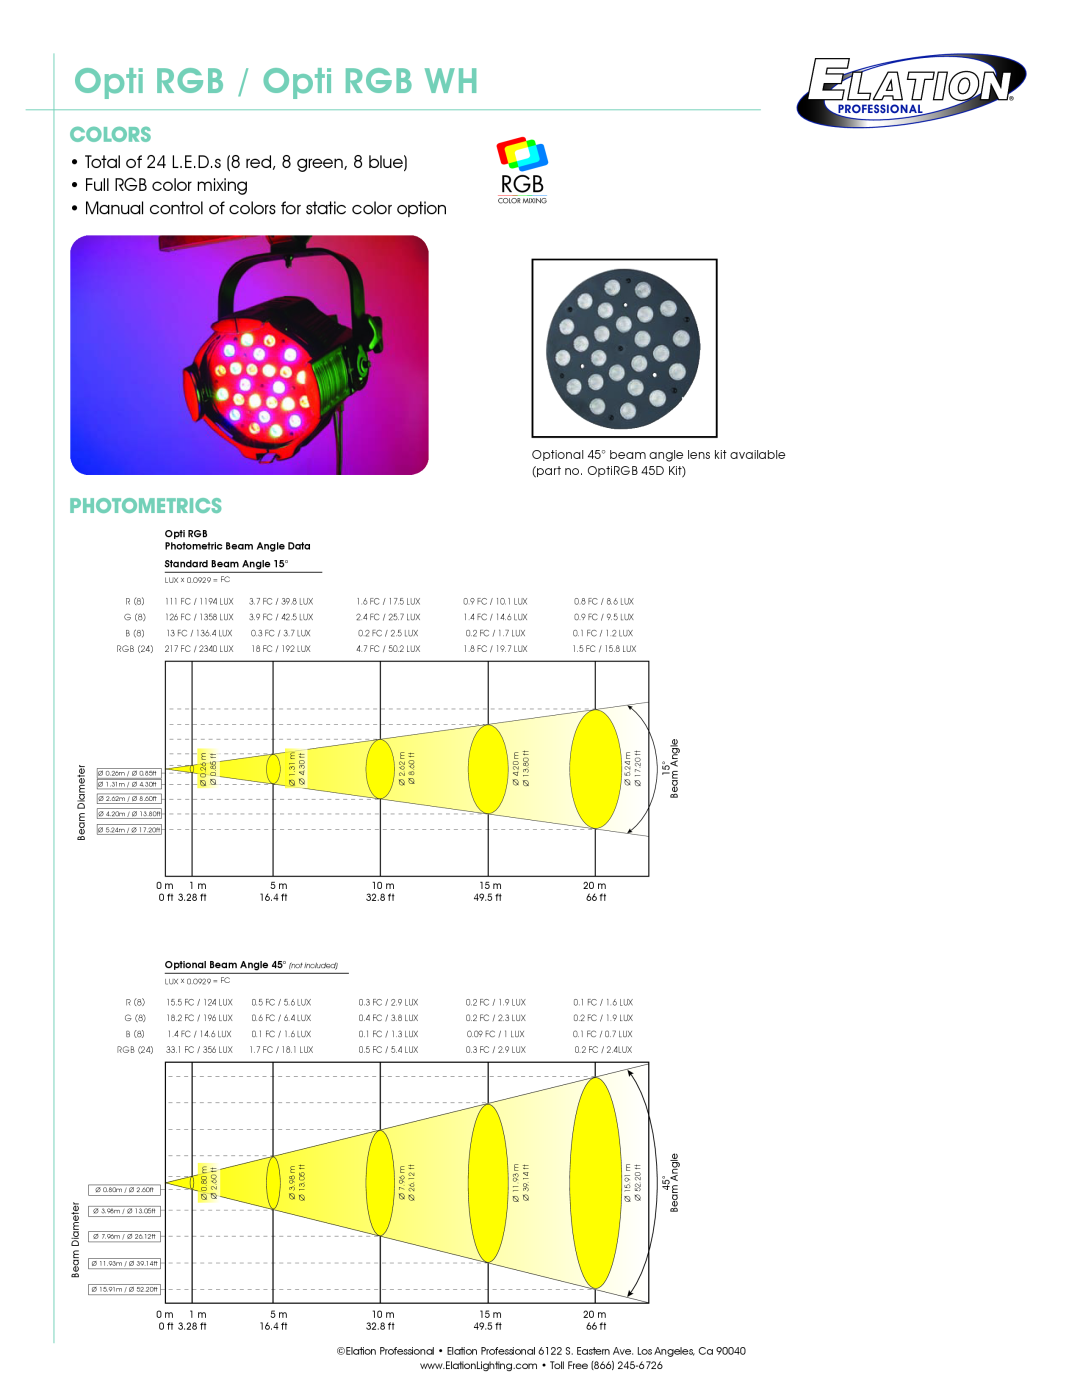 Elation Professional technical specifications Colors, Photometrics, Opti RGB / Opti RGB WH 